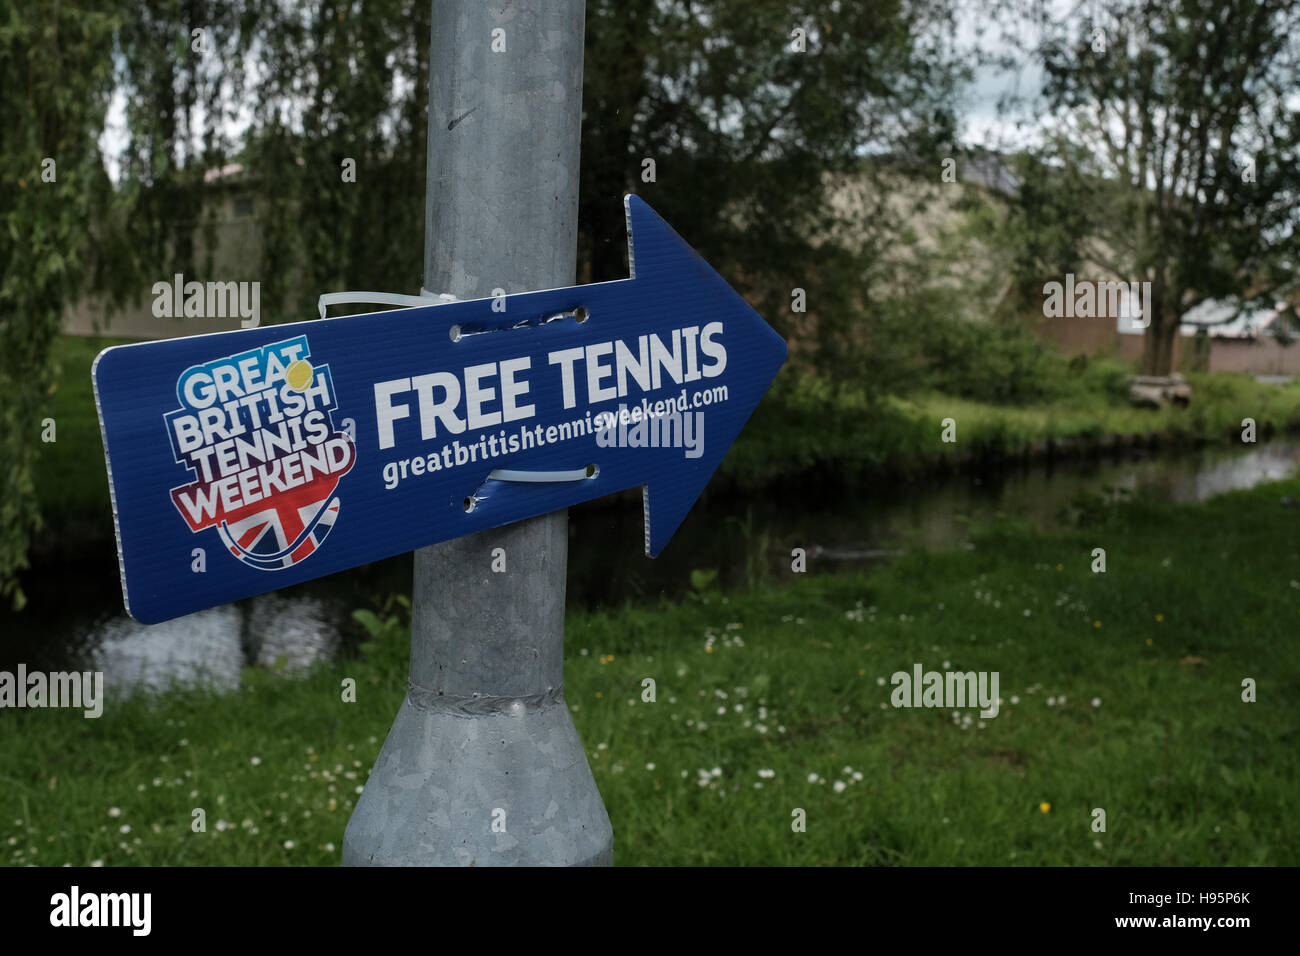 Great British tennis weekend sign promoting free tennis Stock Photo